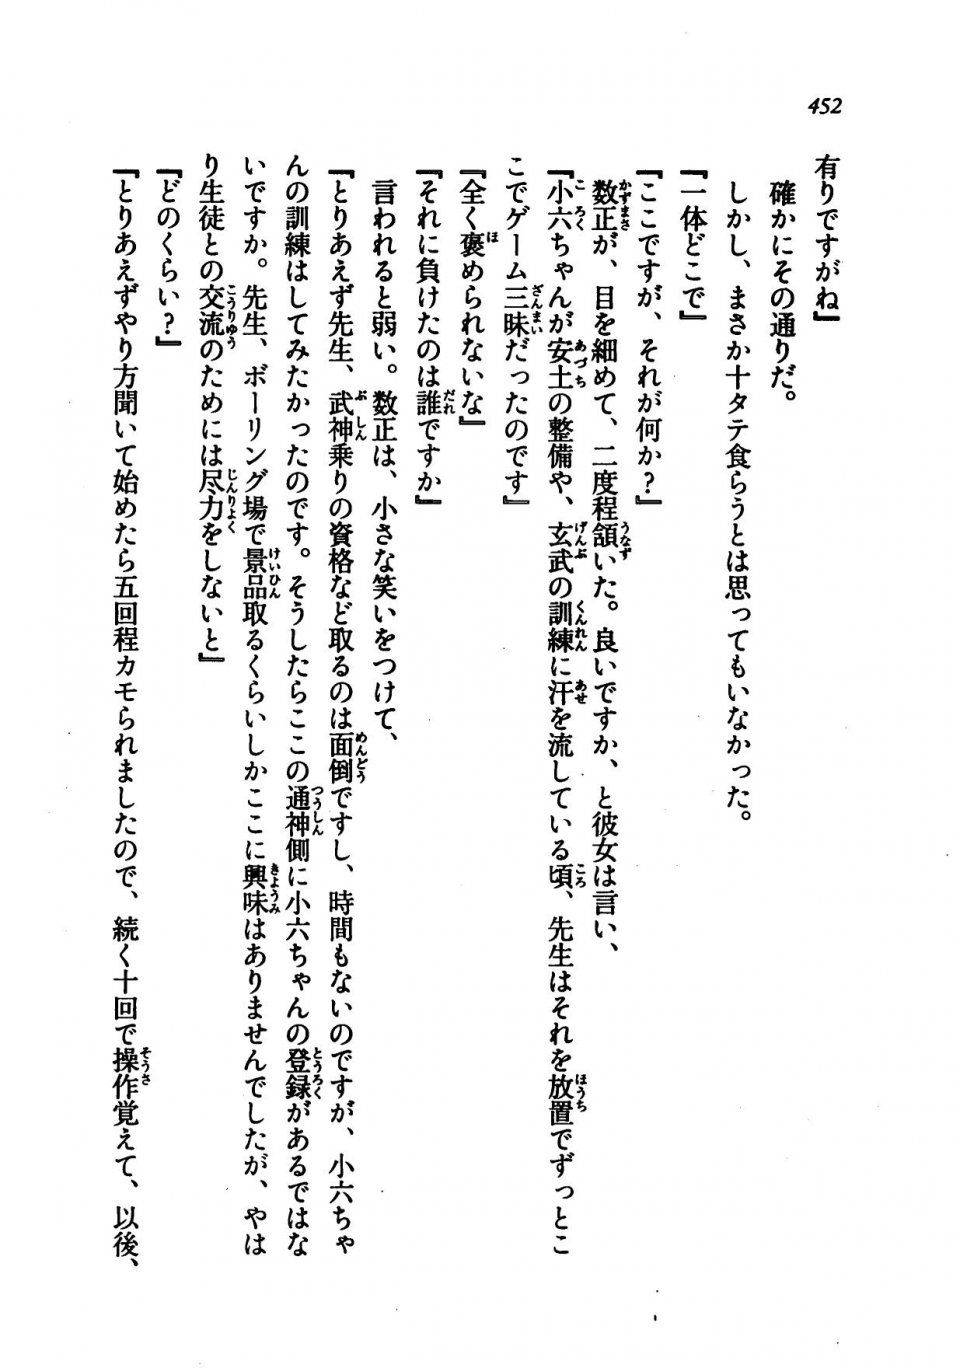 Kyoukai Senjou no Horizon LN Vol 21(8C) Part 1 - Photo #451